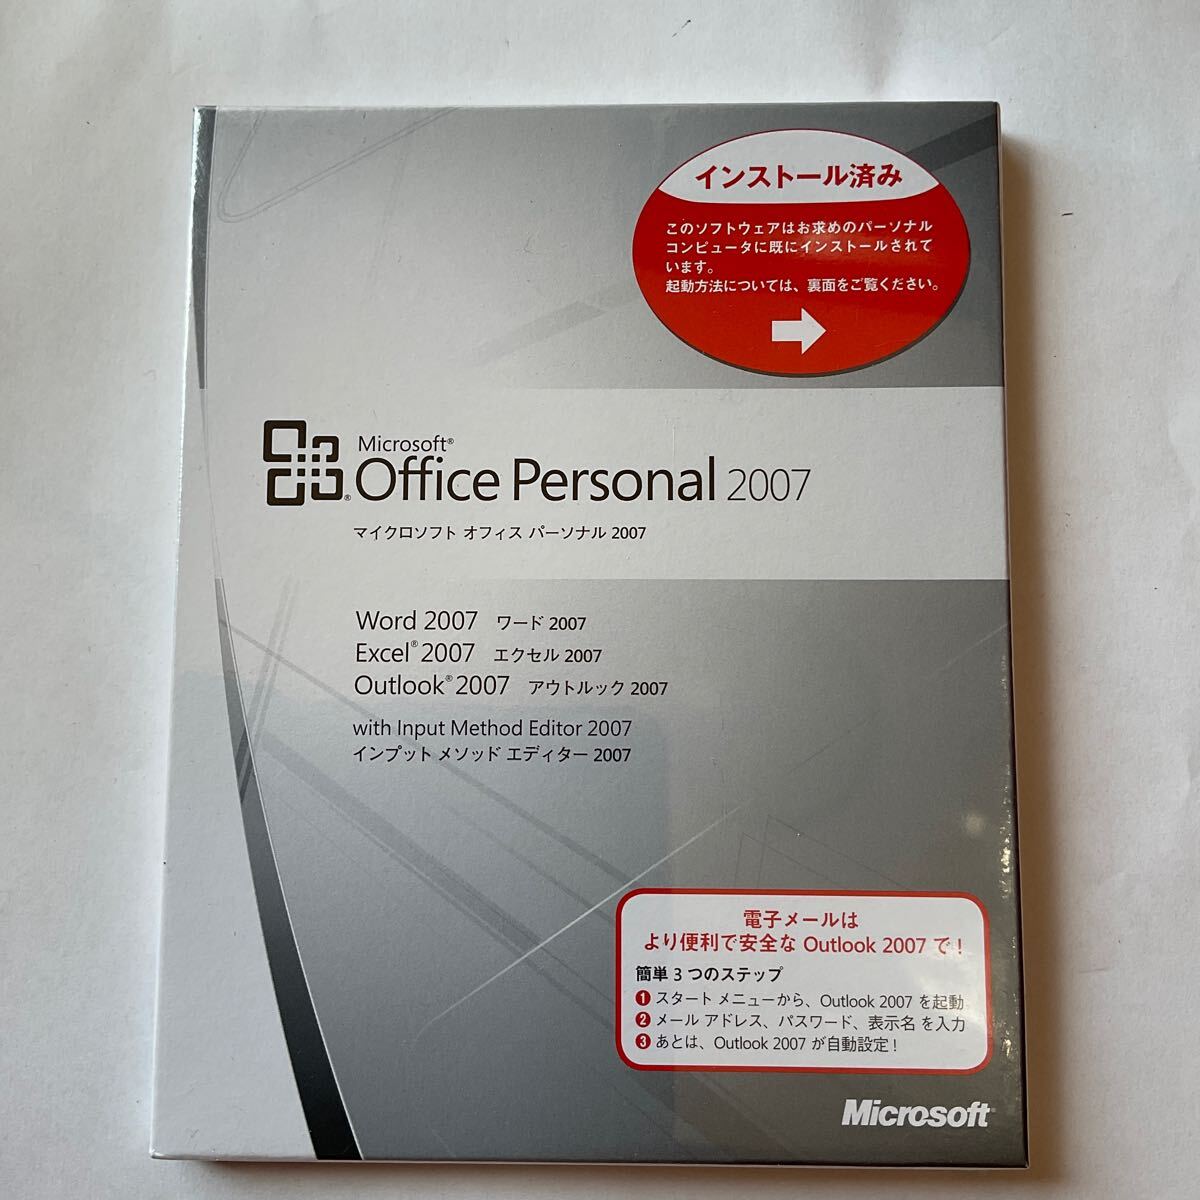 * (E007) новый товар Microsoft Office 2007 Personal